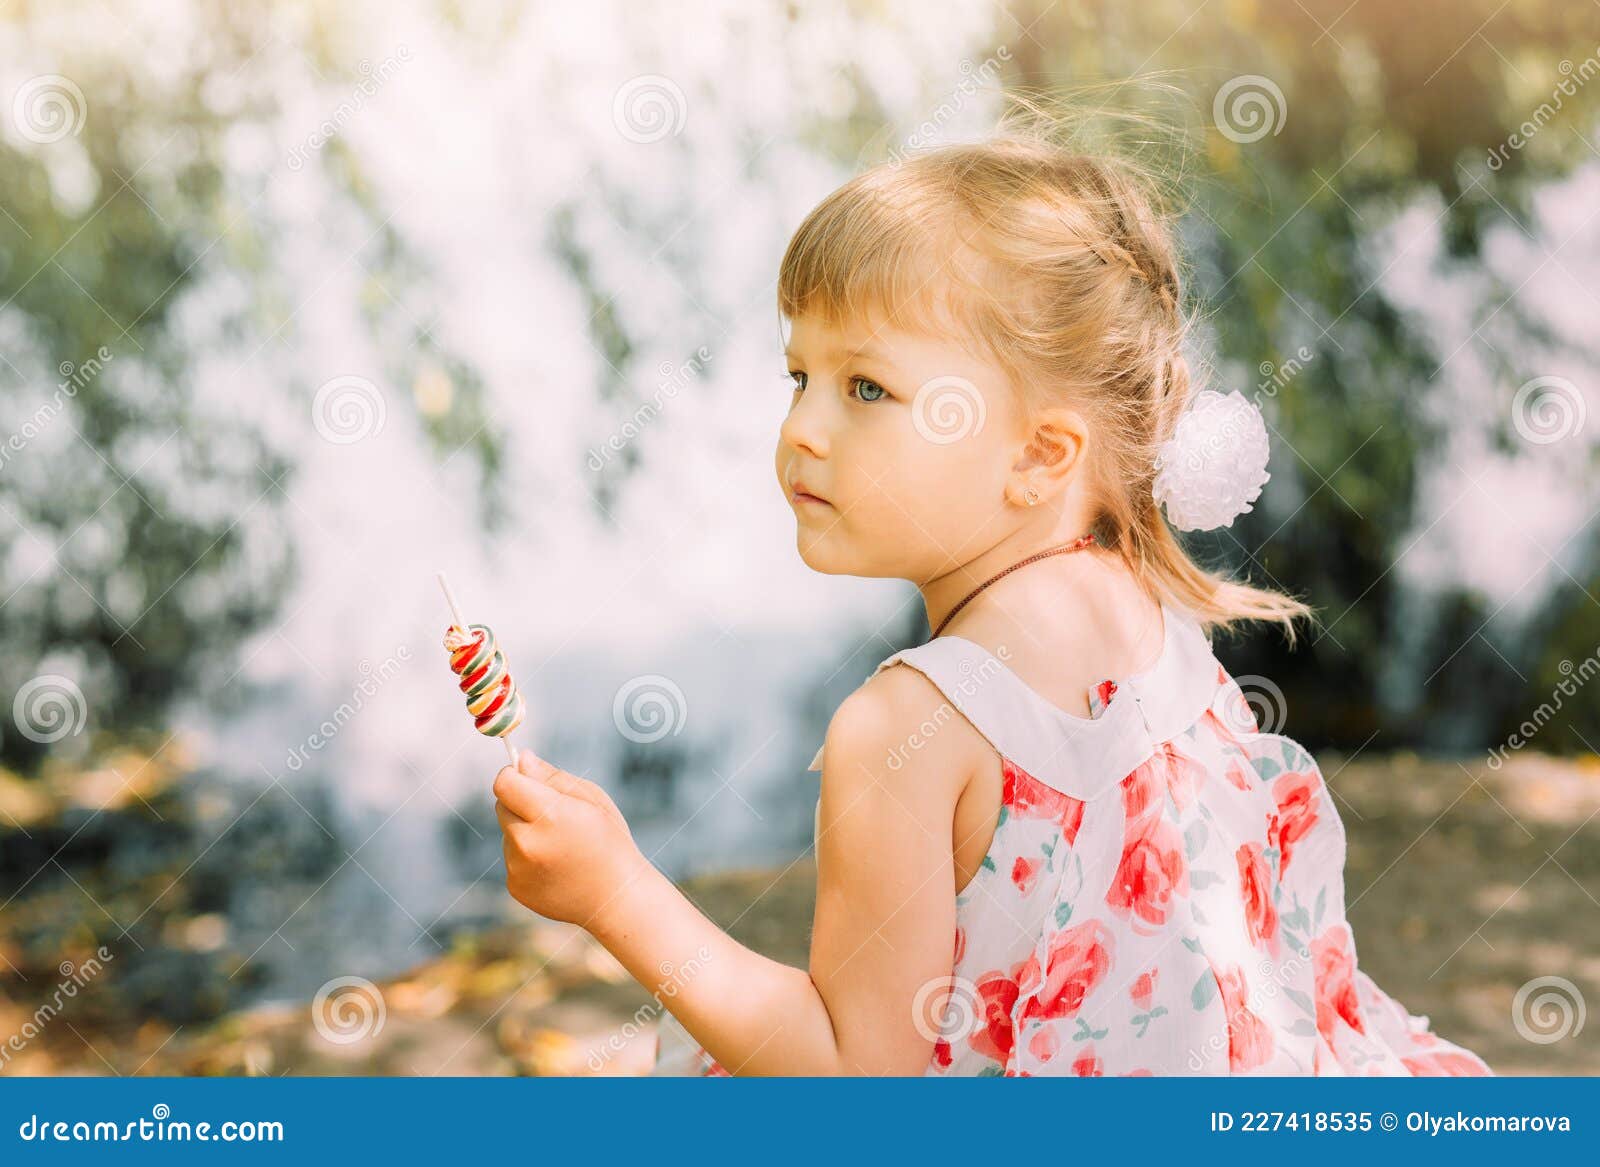 Little Cute Funny Girl Licking Lollipop Stock Image - Image of girl ...